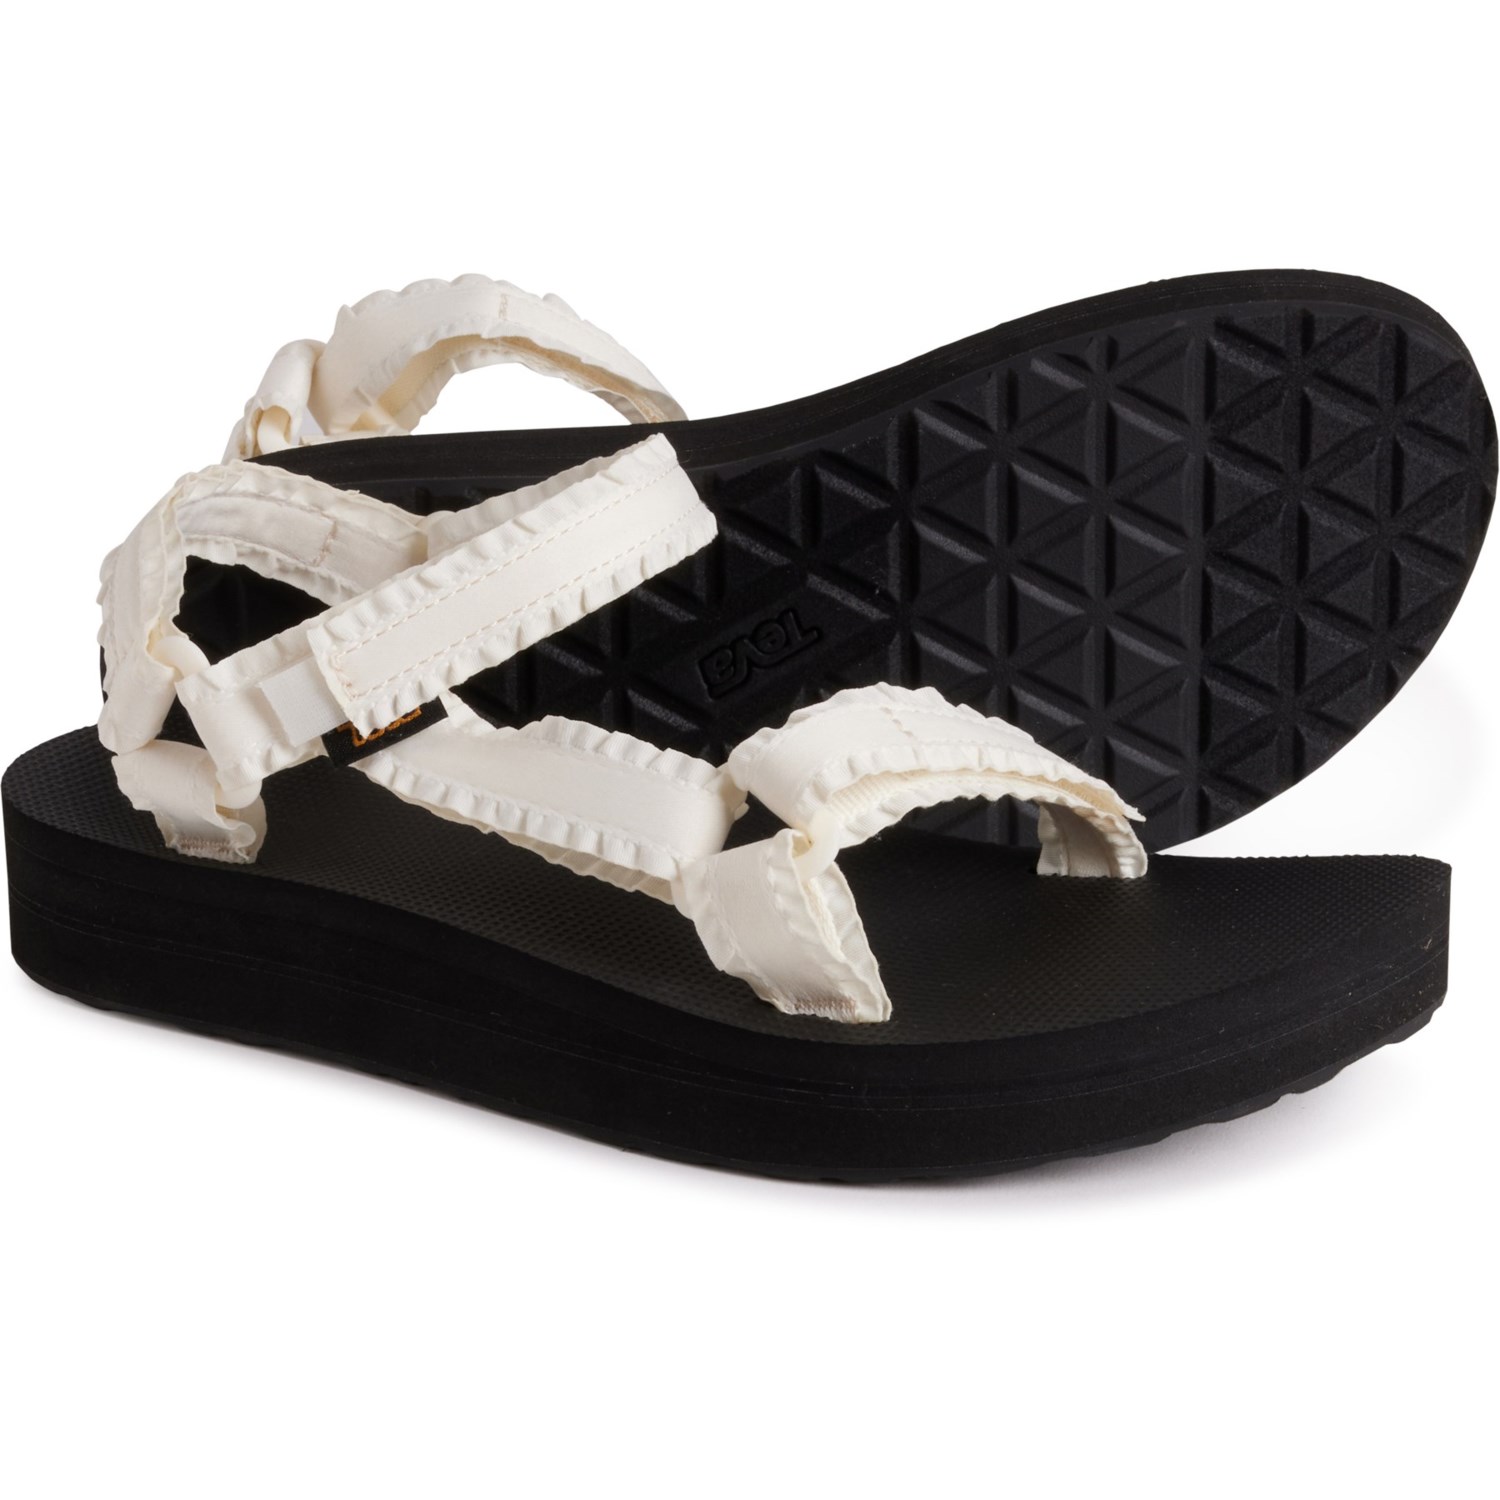 () eo fB[X ~bhtH[ jo[T Ah[ `L[ T_ Teva women Midform Universal Adorn Chunky Sandals (For Women) White